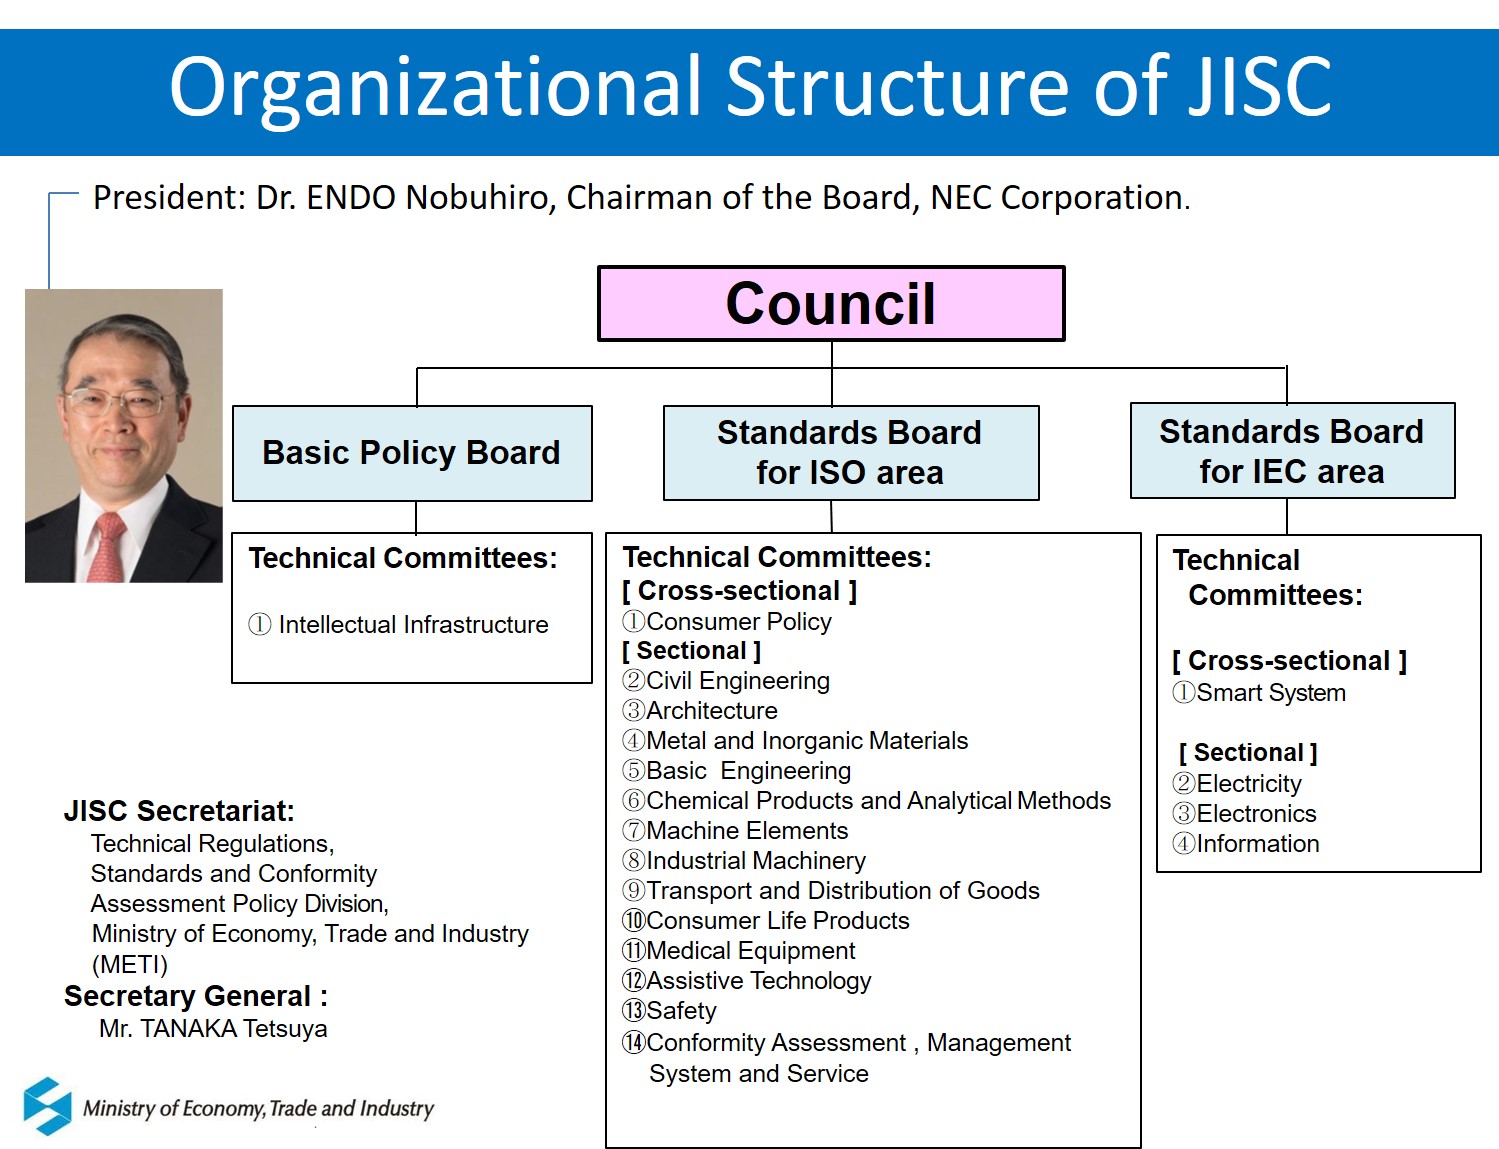 Figure. Organizational Structure of JISC